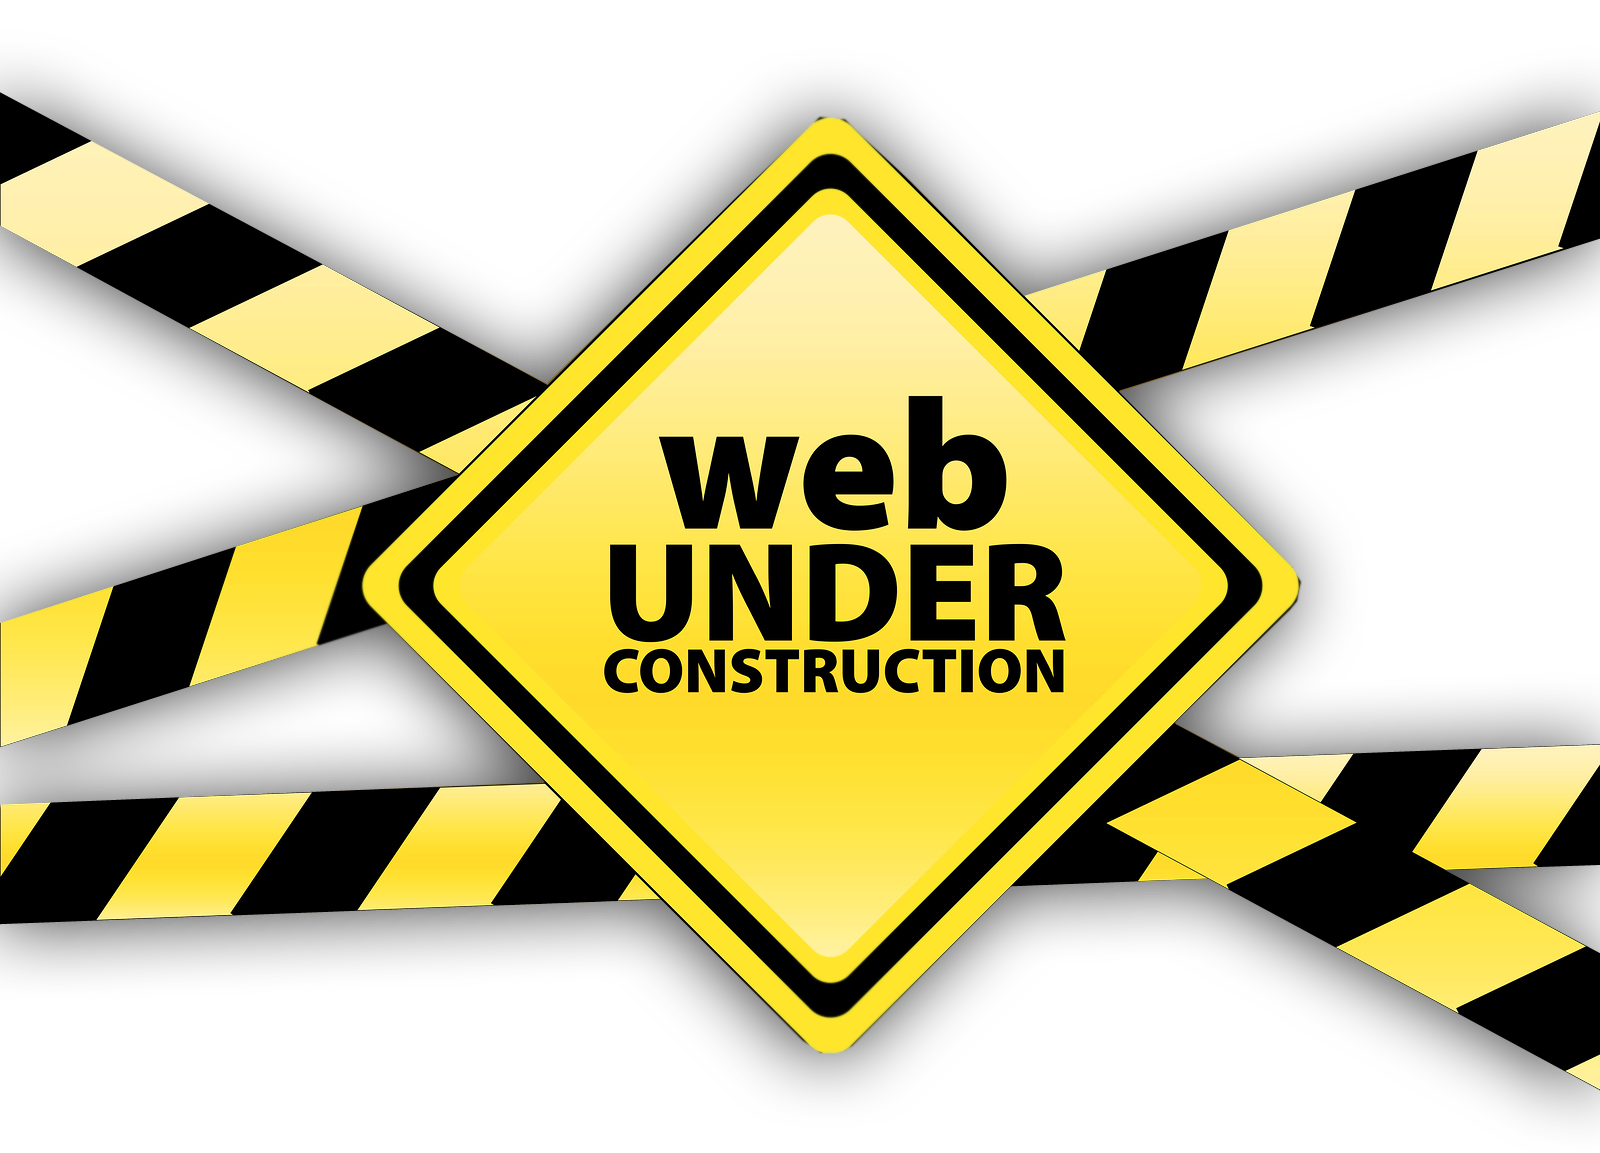 Site Under Construction image